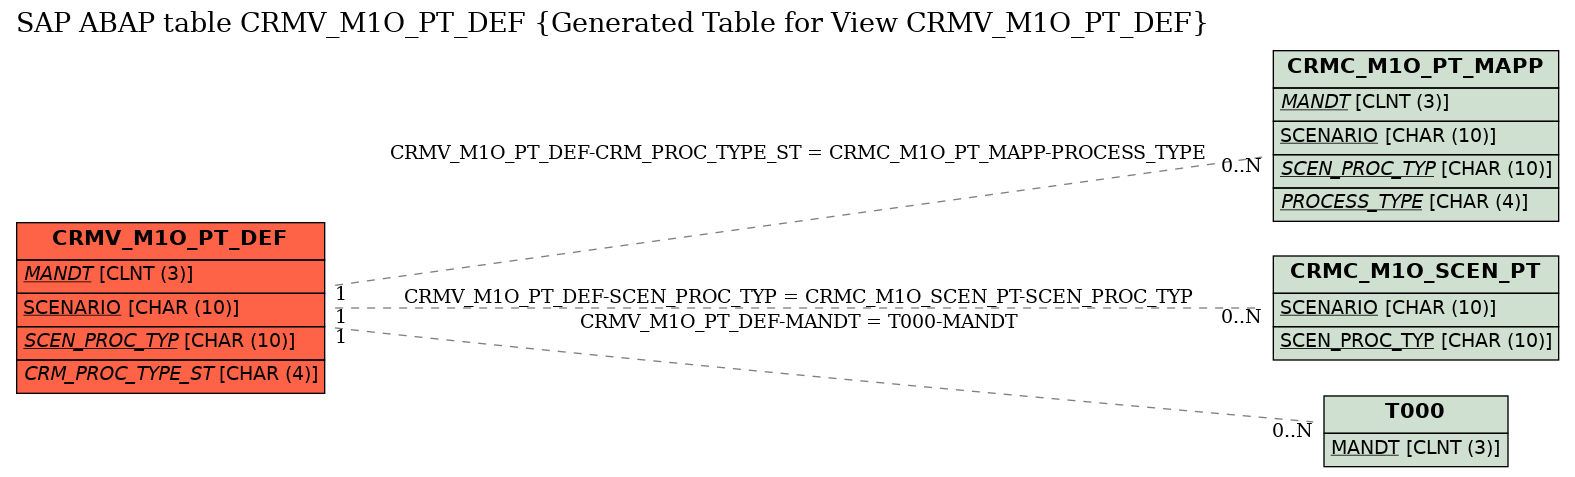 E-R Diagram for table CRMV_M1O_PT_DEF (Generated Table for View CRMV_M1O_PT_DEF)